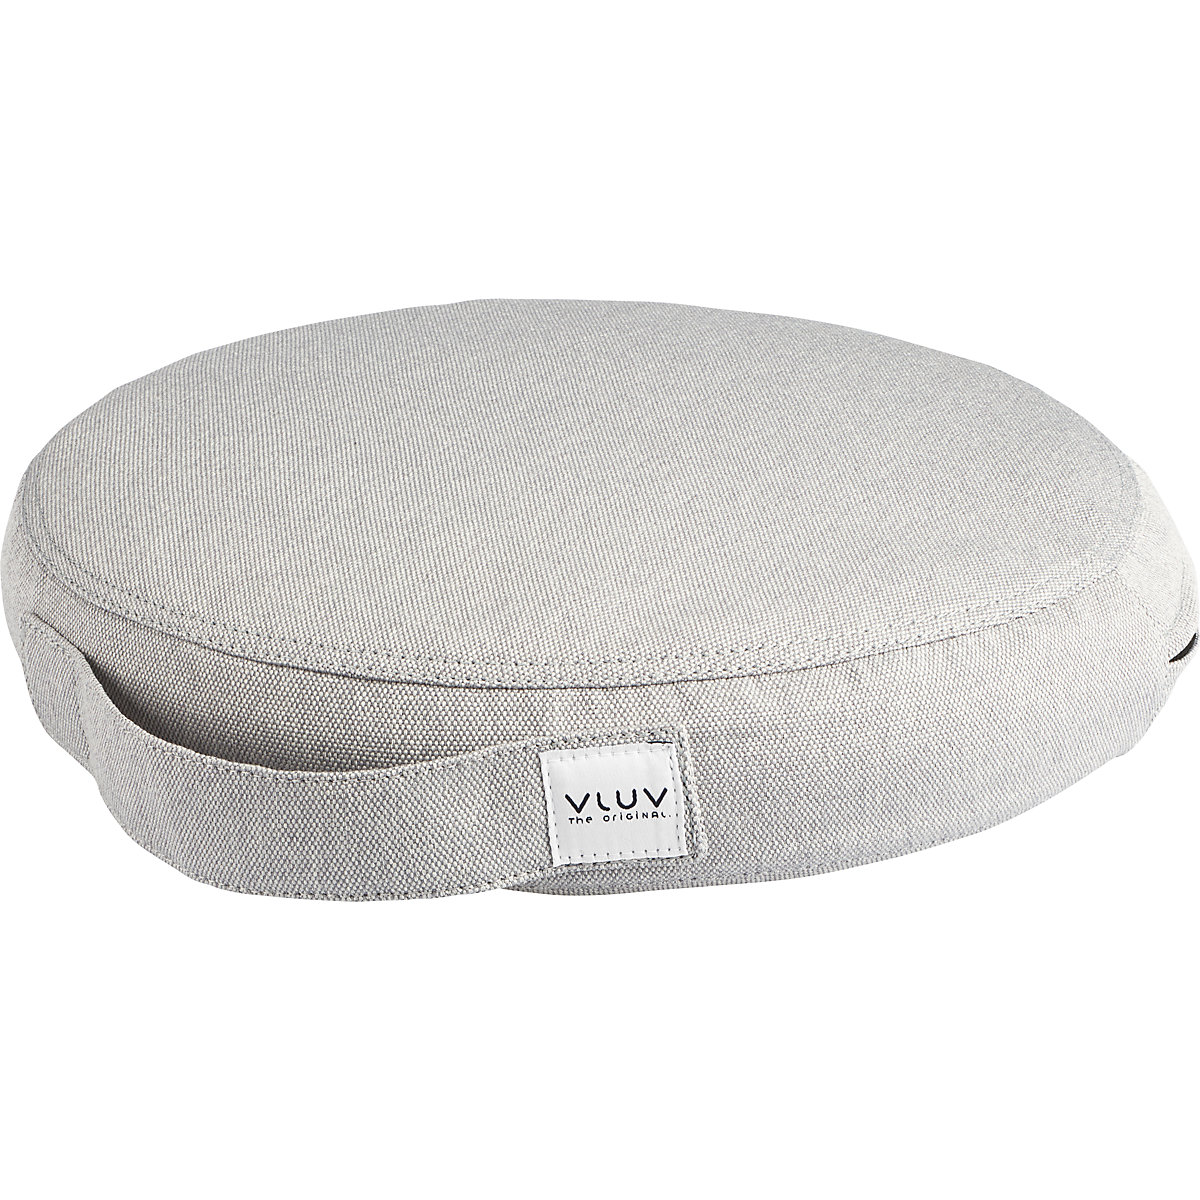 Cuscino per equilibrio PIL&PED LEIV – VLUV, con rivestimento in tessuto, Ø 360 mm, grigio argento-13